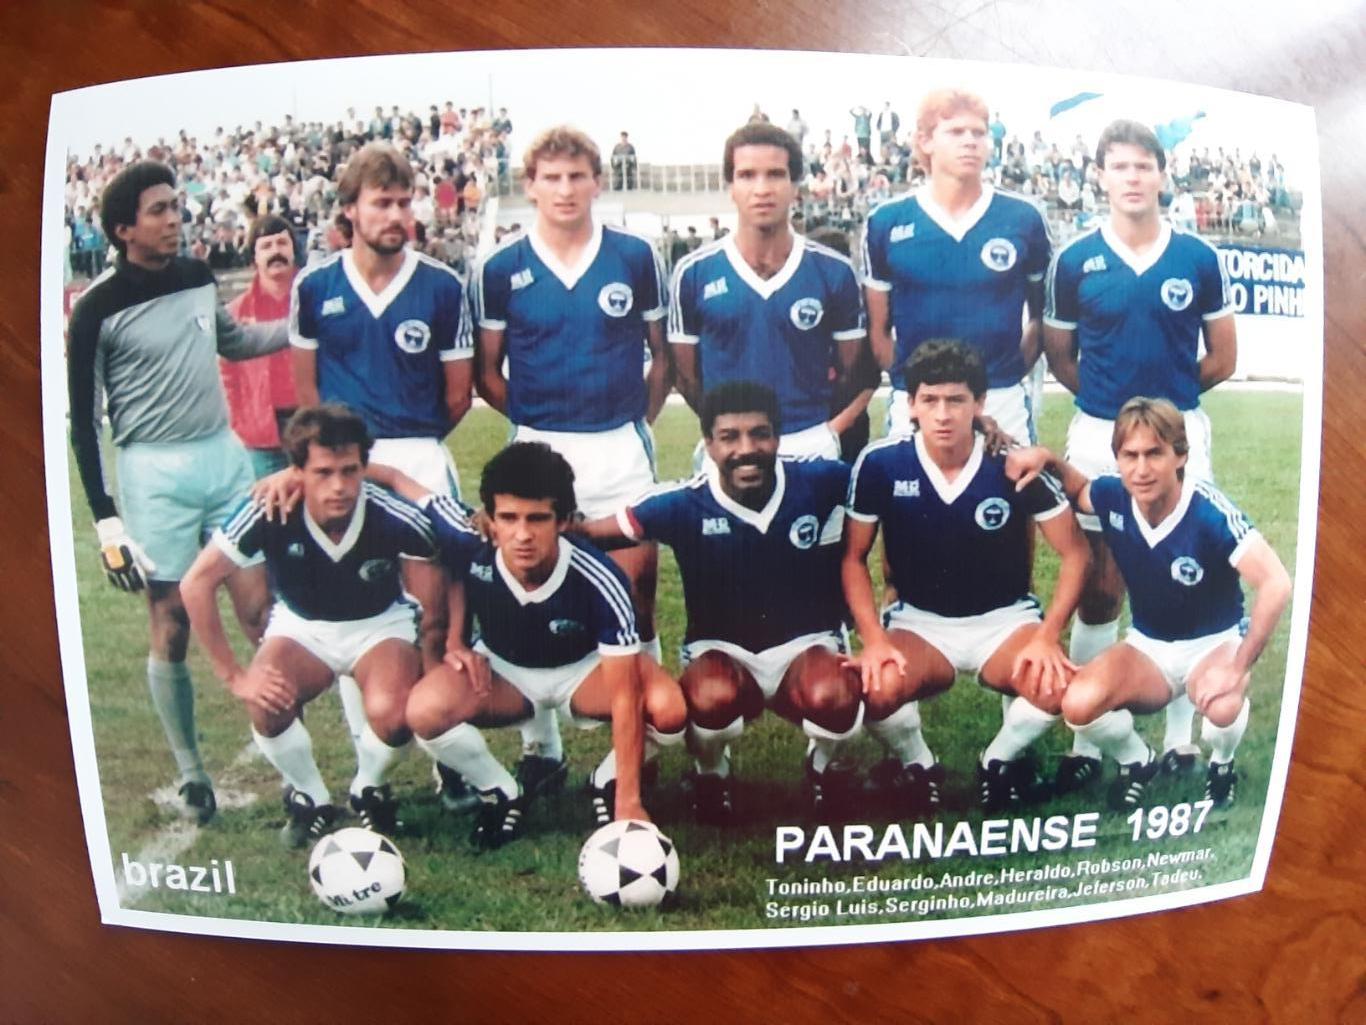 PARANAENSE 1987(BRAZIL)